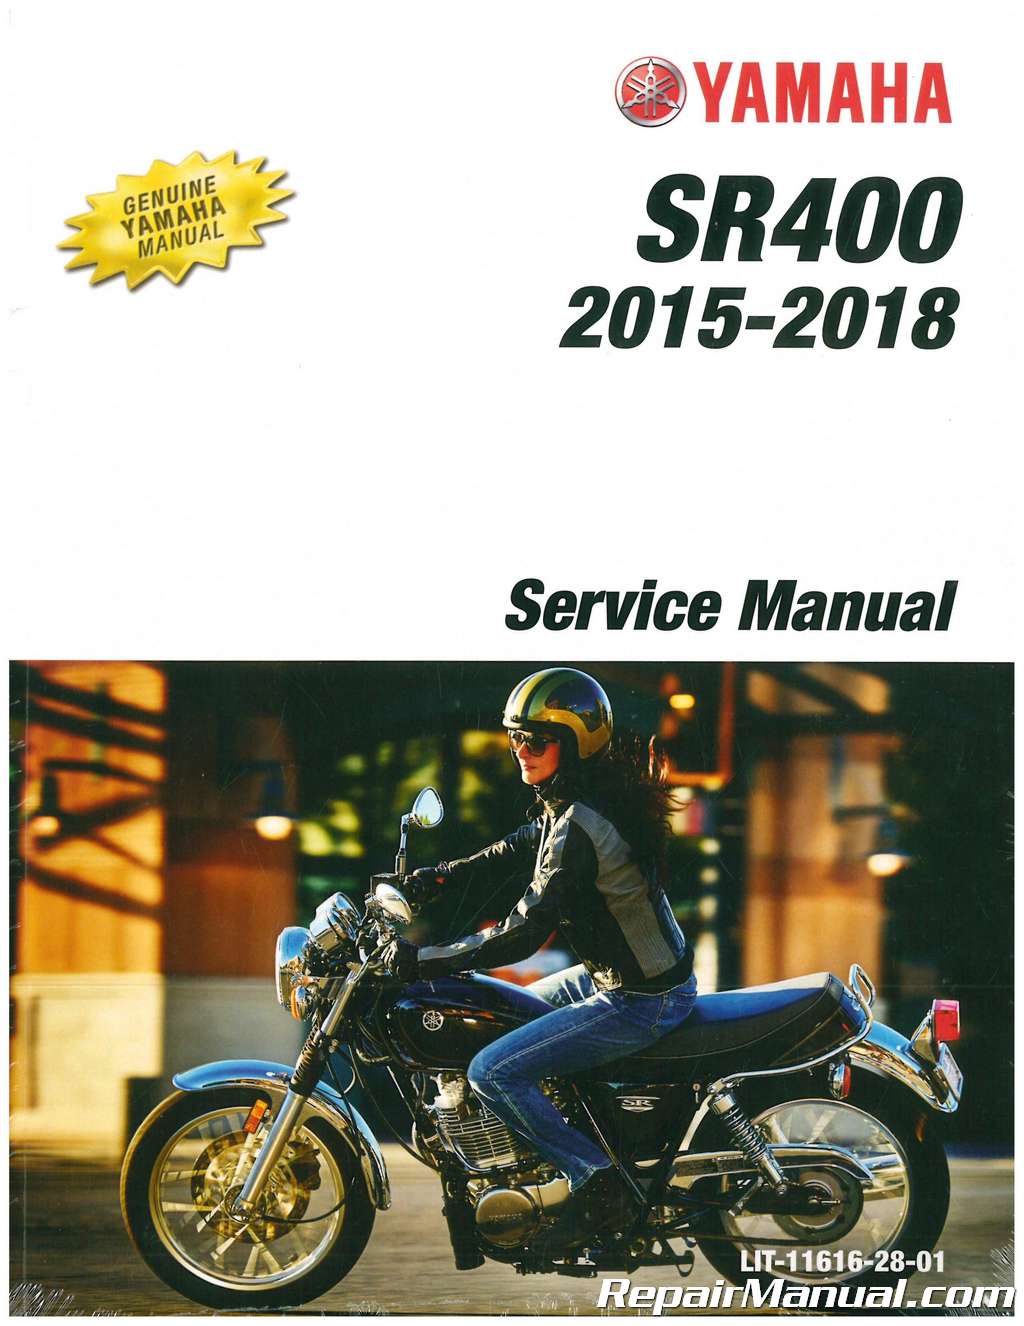 yamaha motorcycle repair manuals